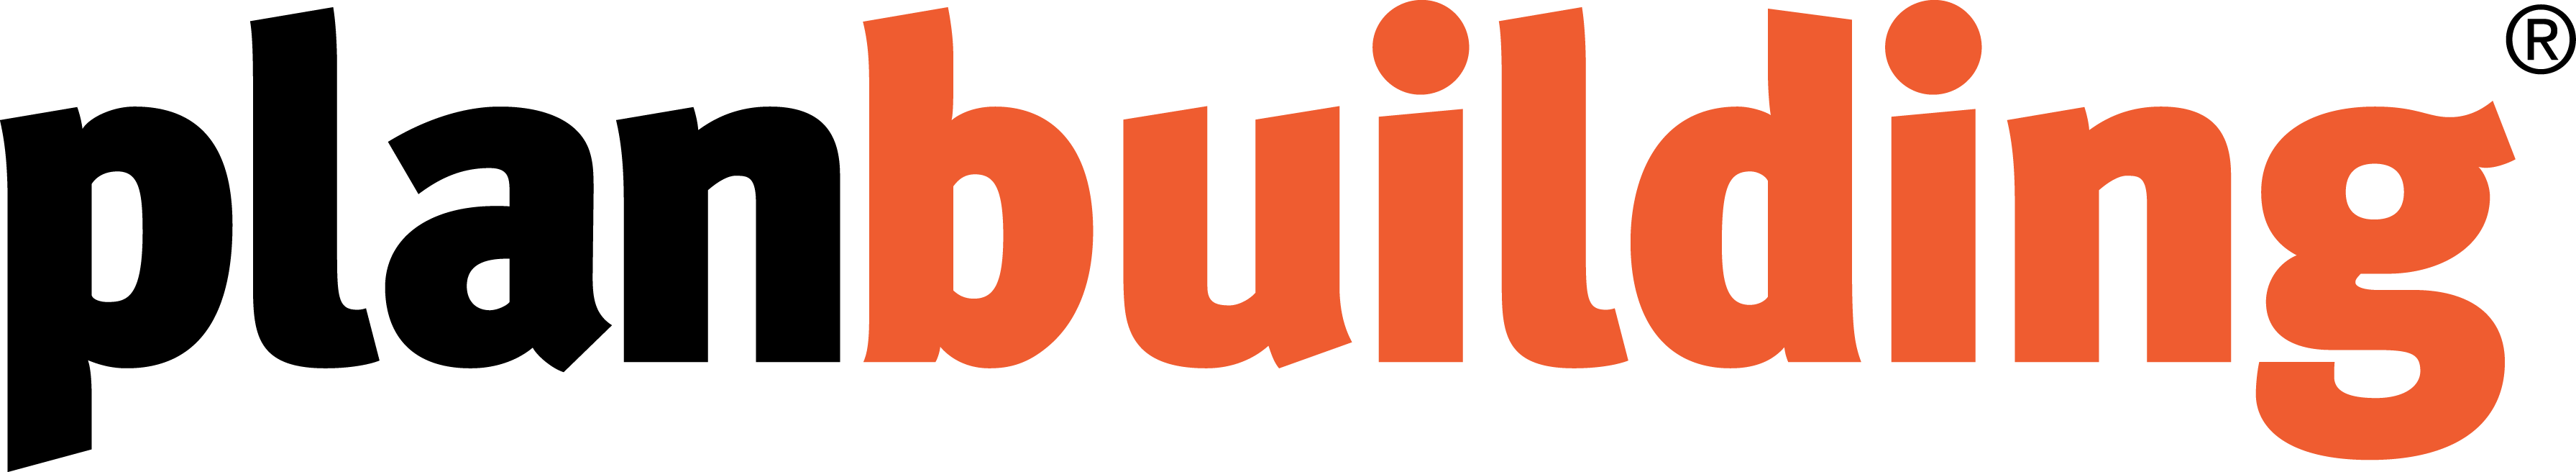 planbuilding-logo-black-orange